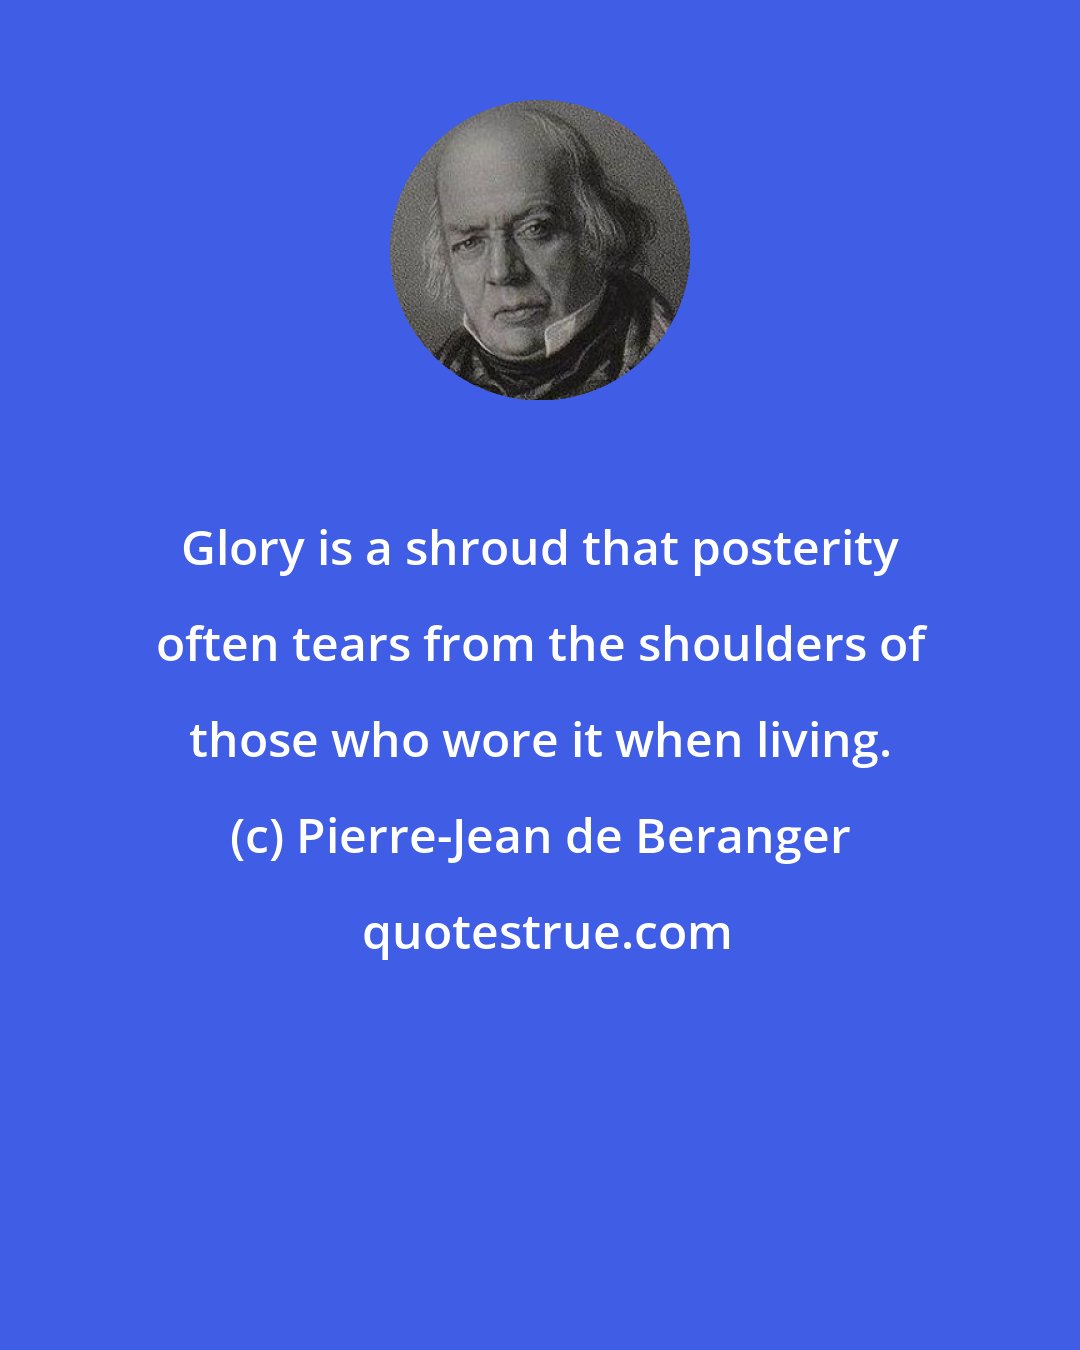 Pierre-Jean de Beranger: Glory is a shroud that posterity often tears from the shoulders of those who wore it when living.